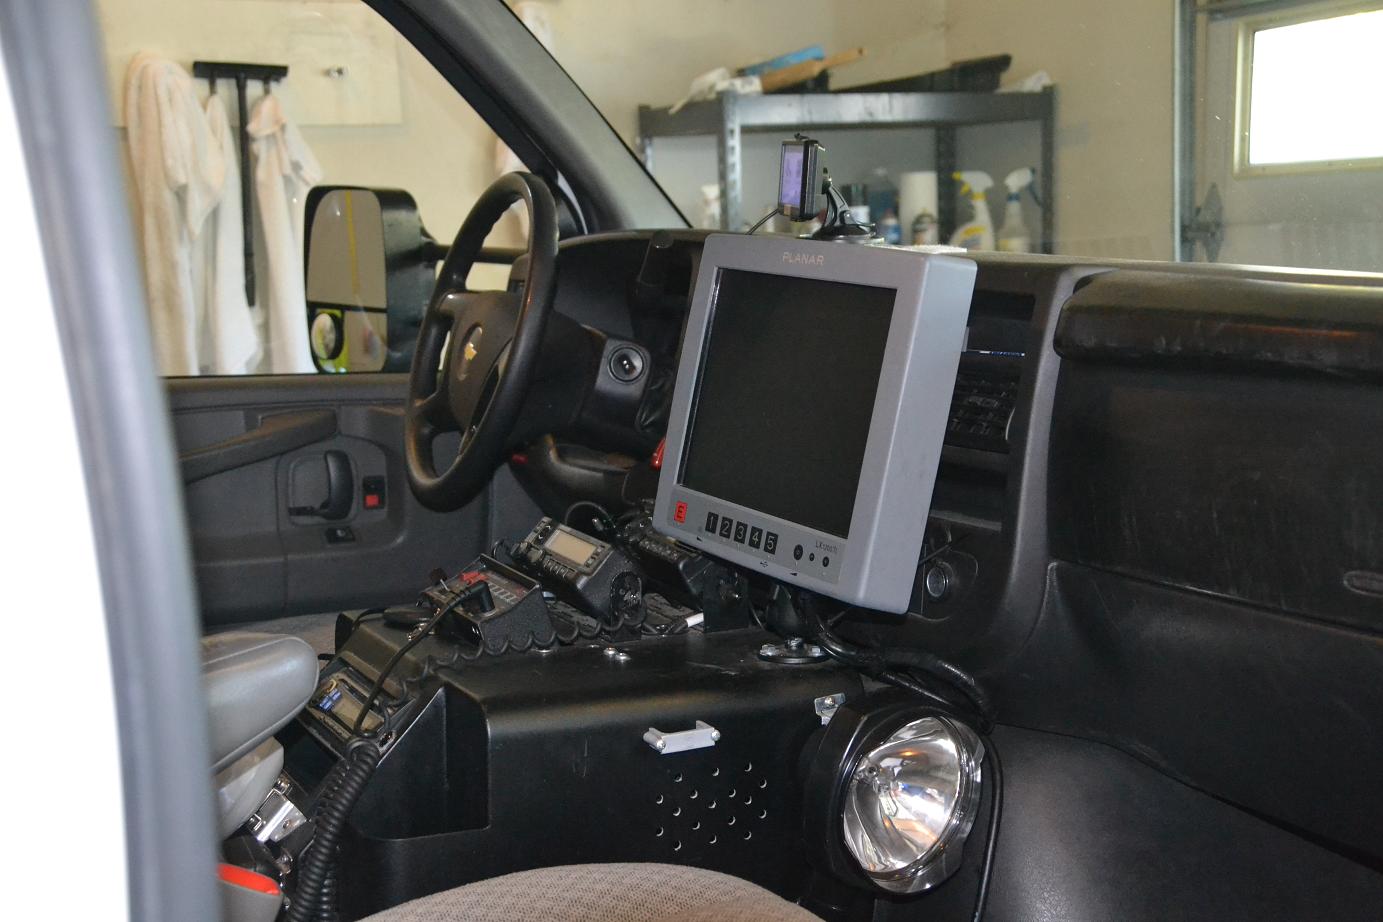 Computer and Radio setup in Sierra Ambulance - photo Gina Clugston